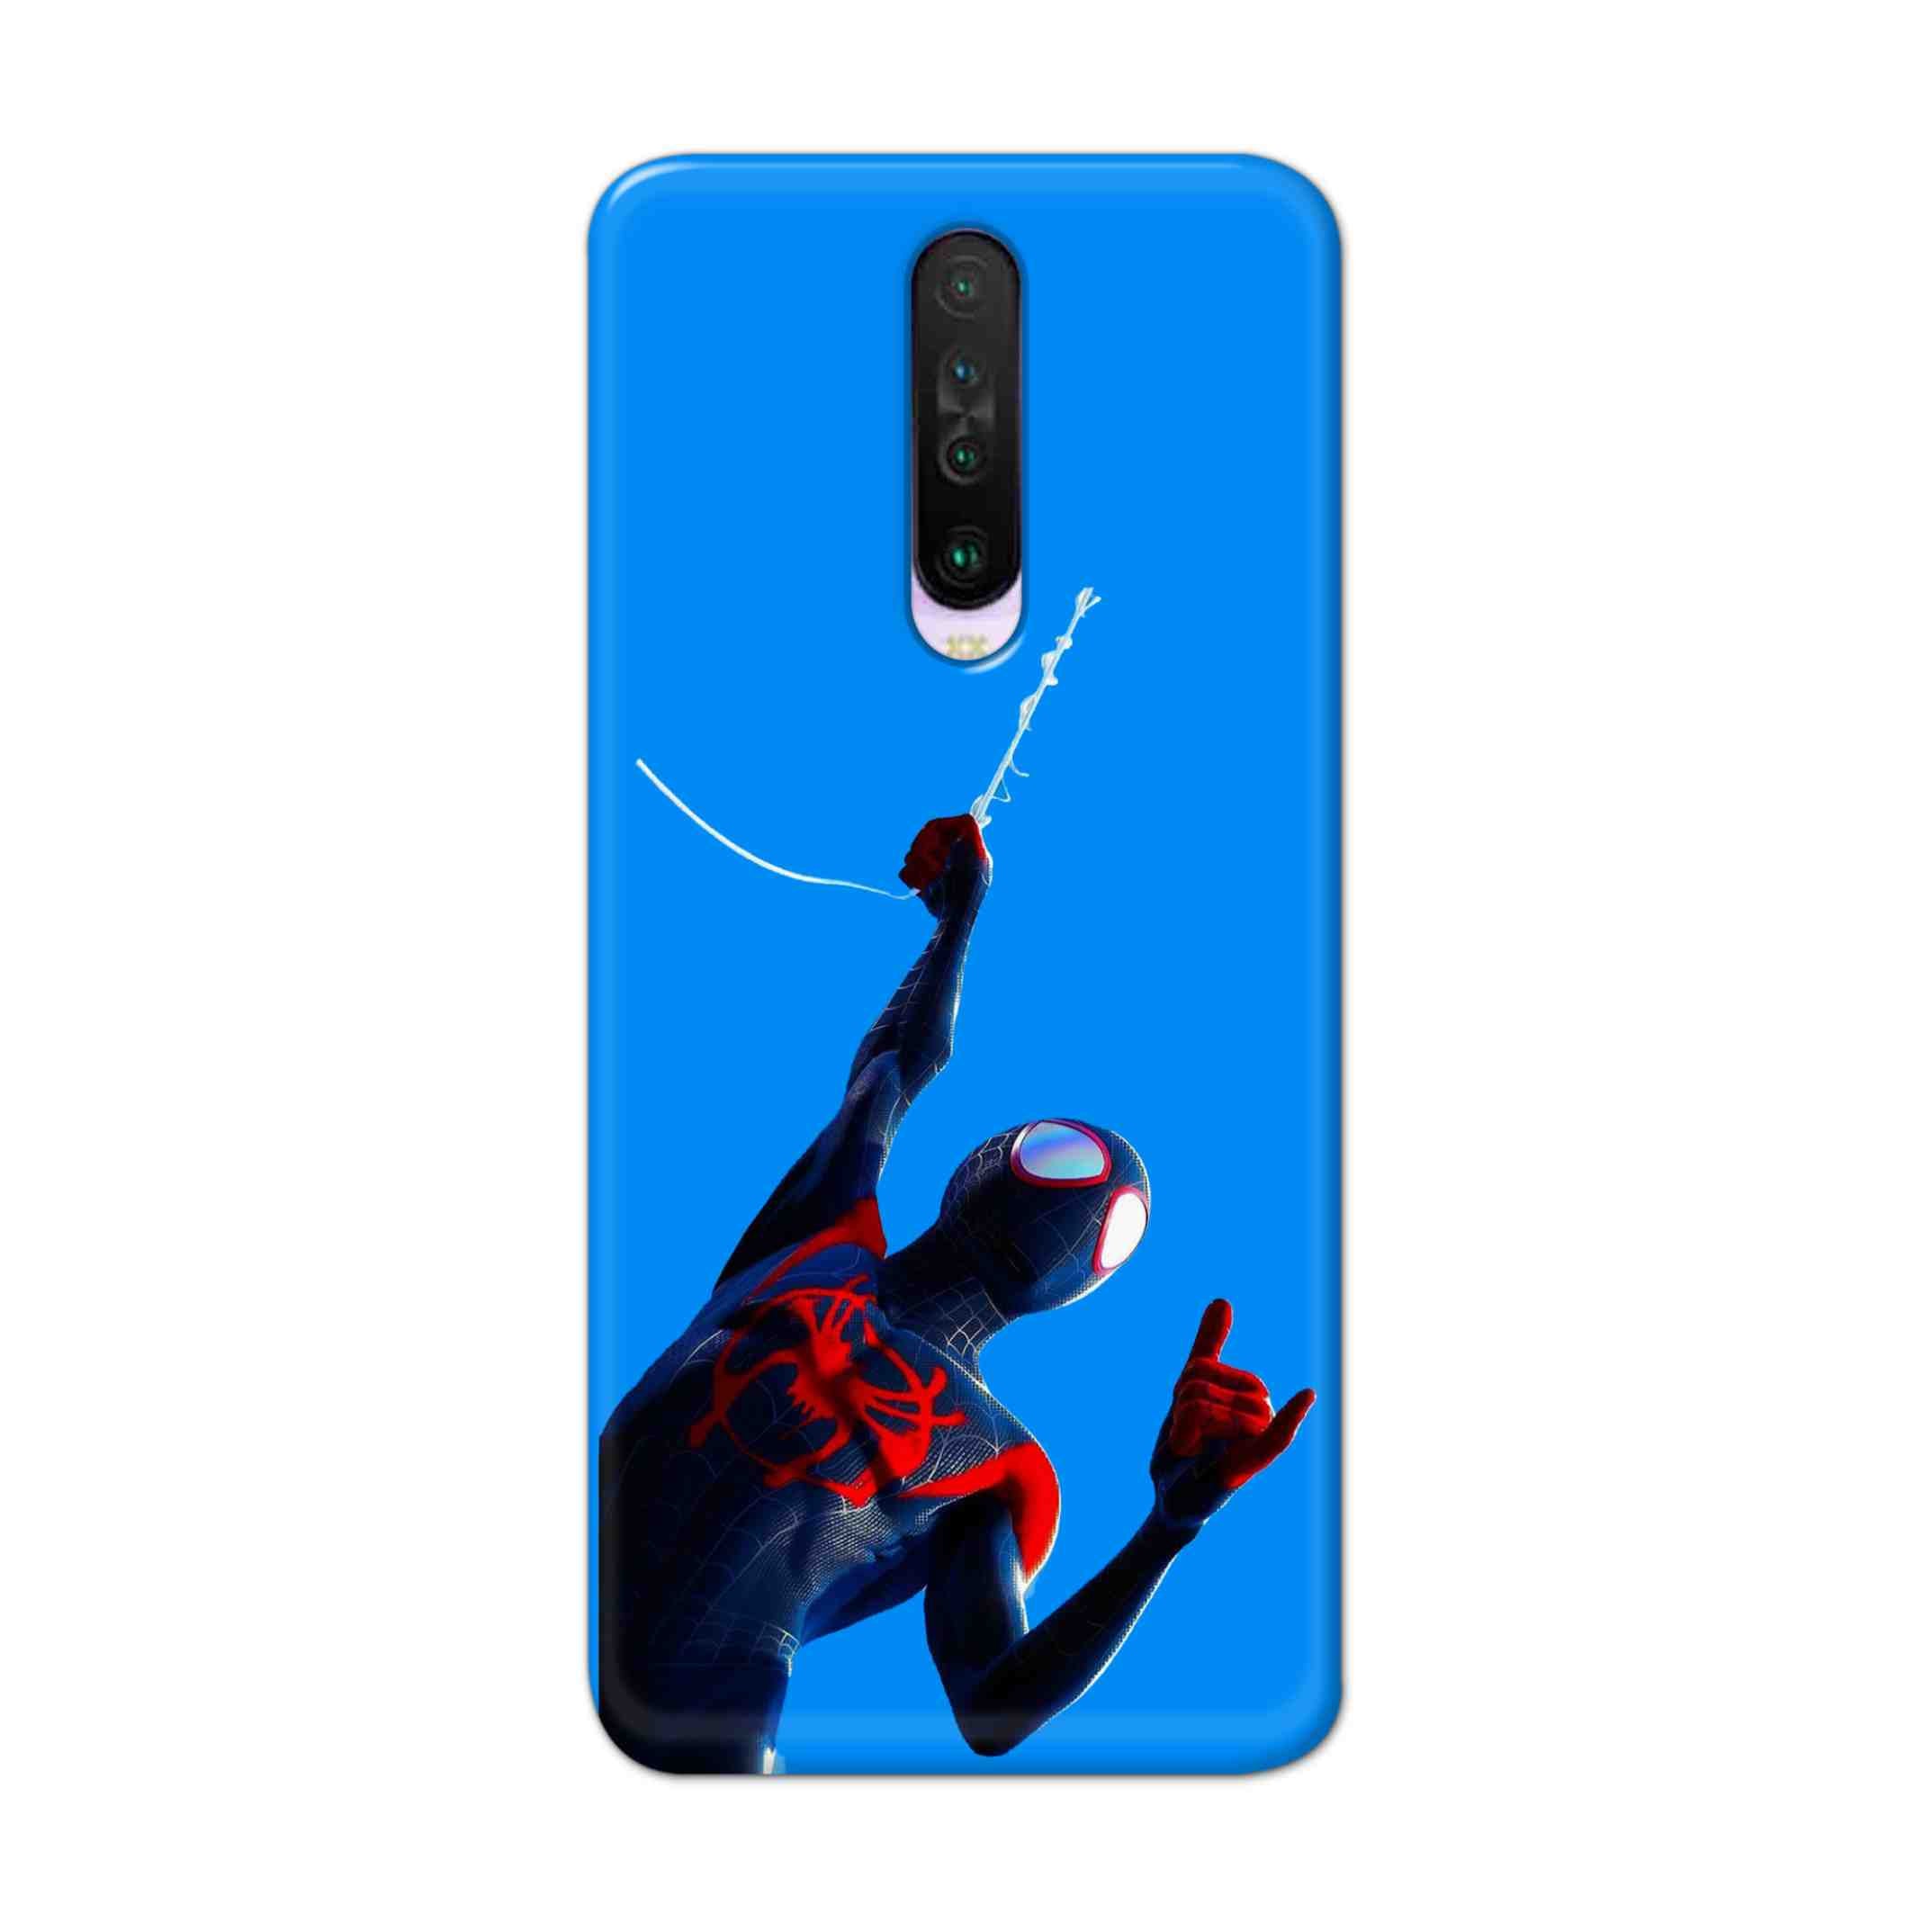 Buy Miles Morales Spiderman Hard Back Mobile Phone Case Cover For Poco X2 Online